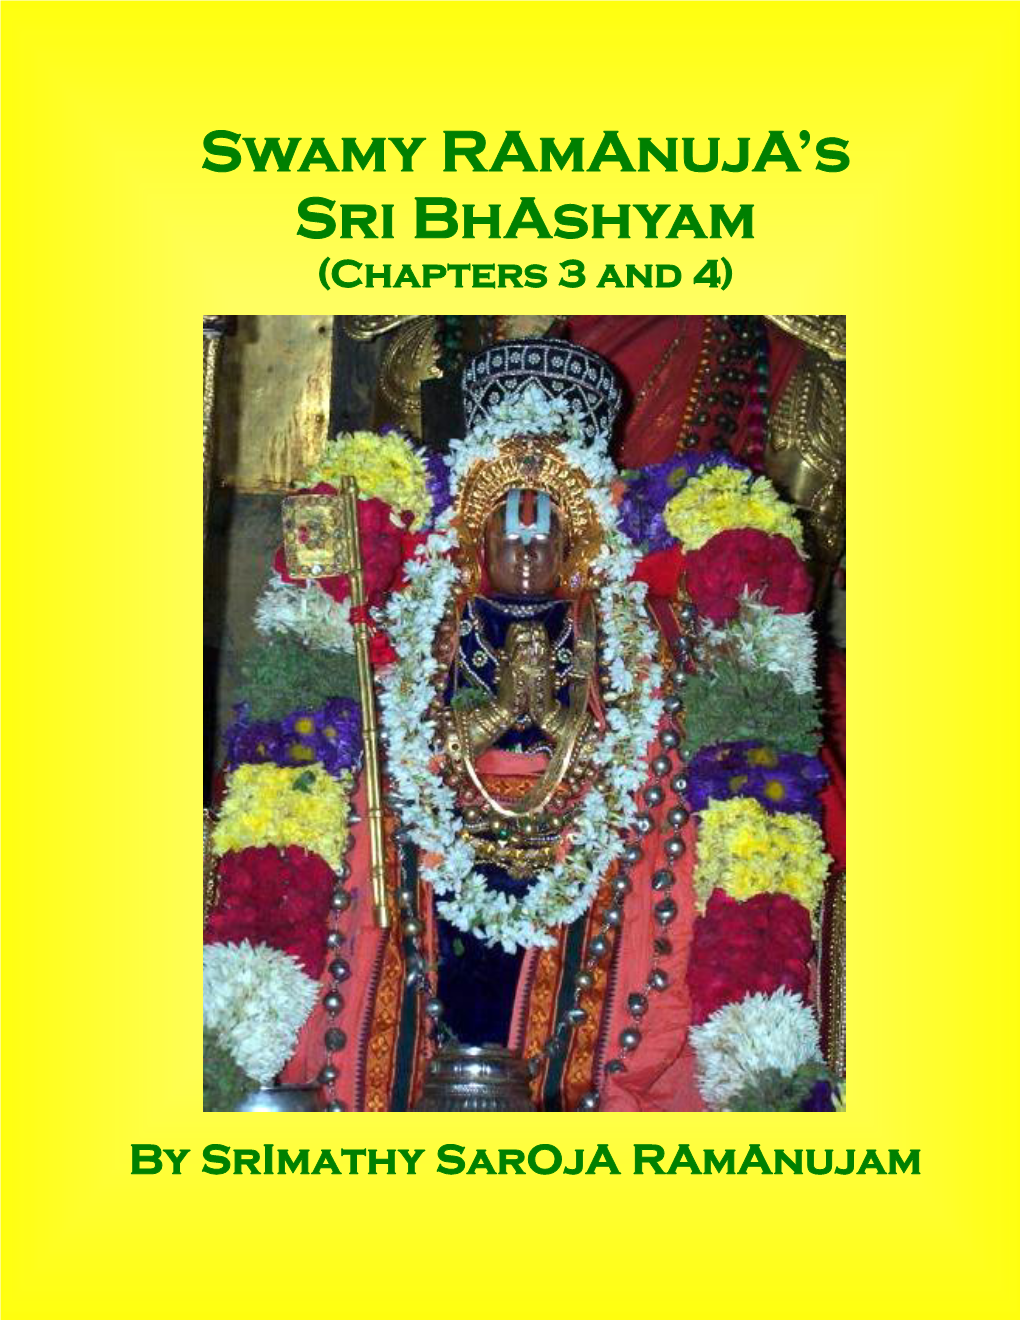 Swamy Ramanuja's Sri Bhashyam